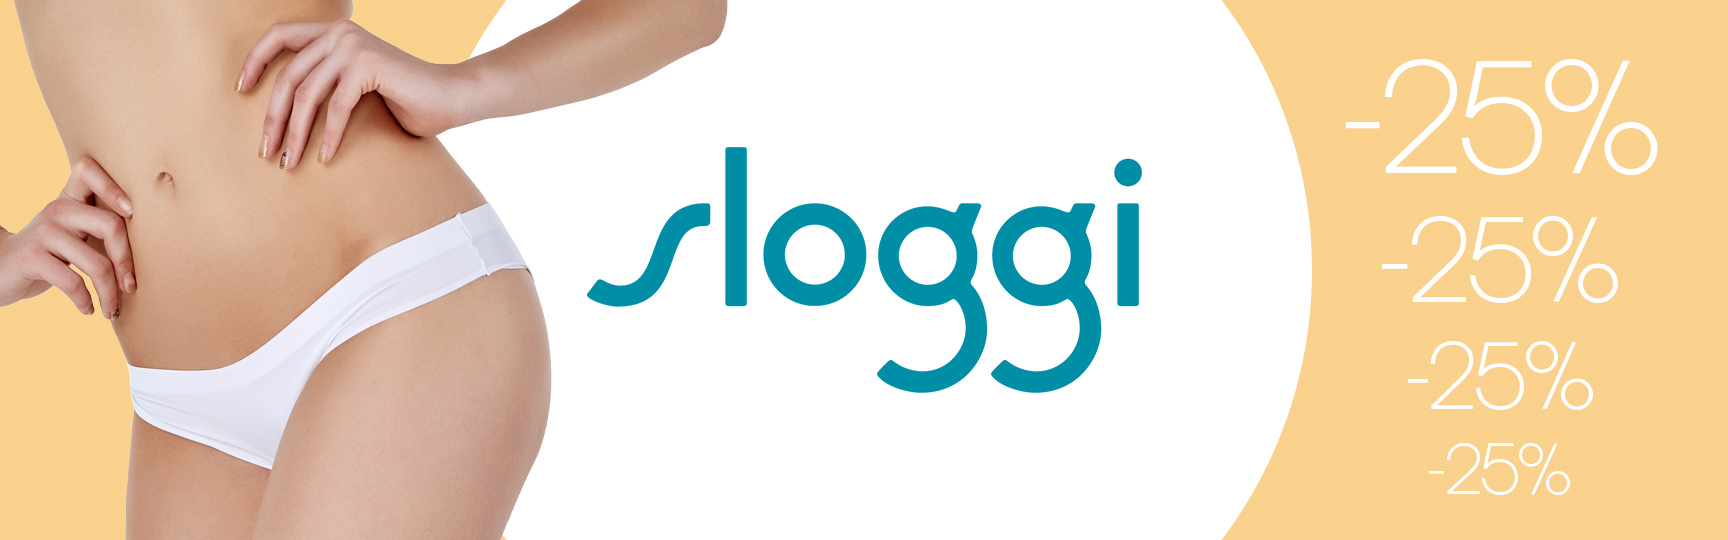 Sloggi banner x